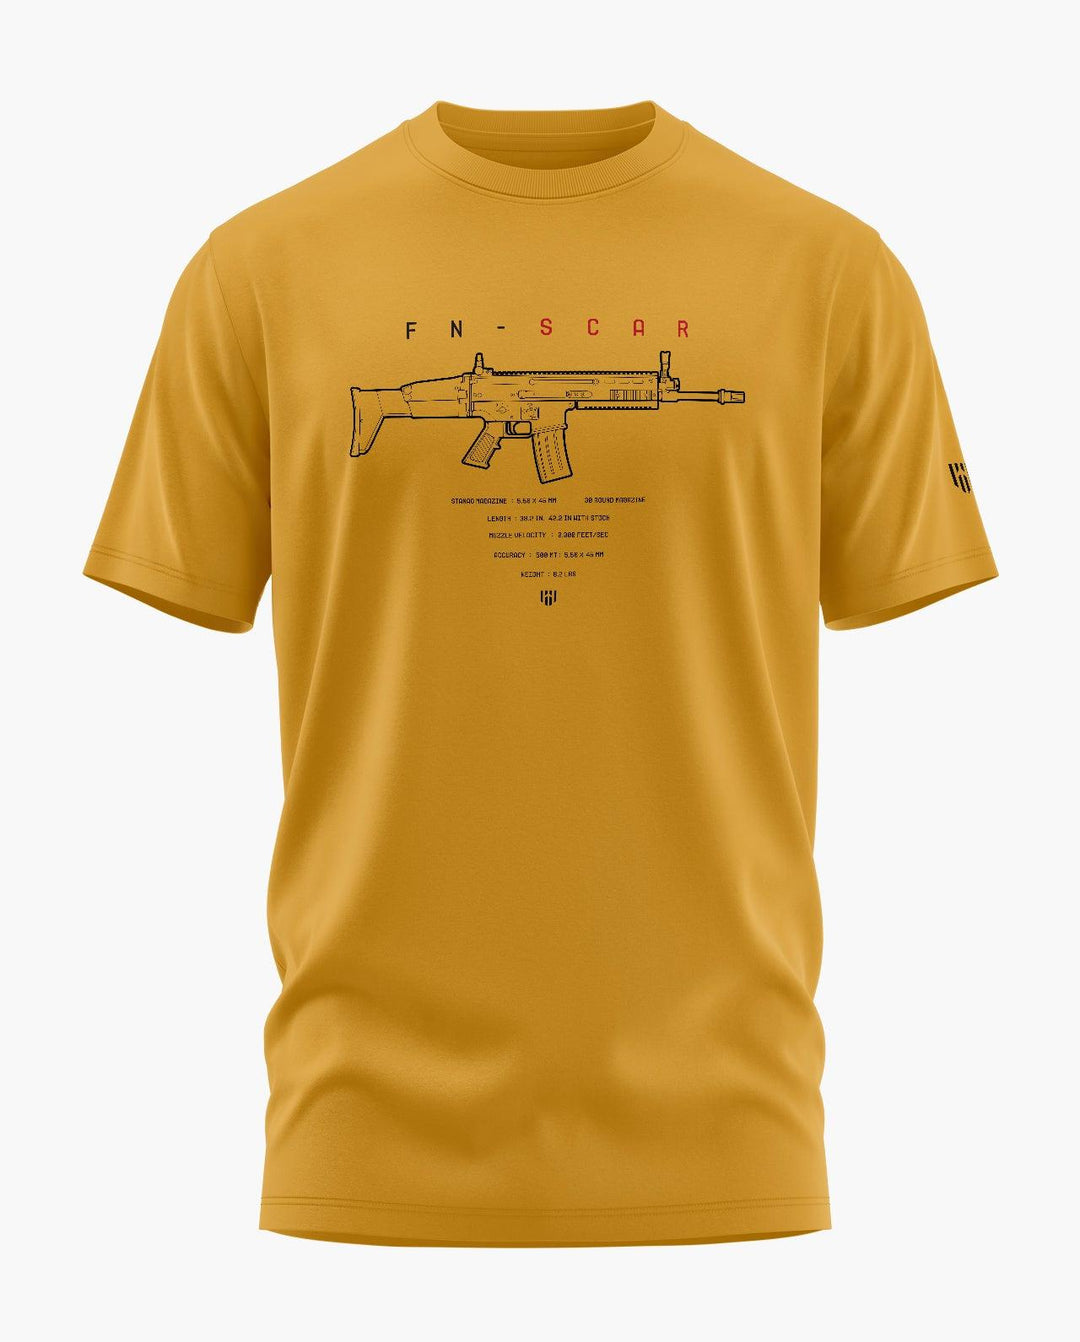 FN Scar T-Shirt - Aero Armour